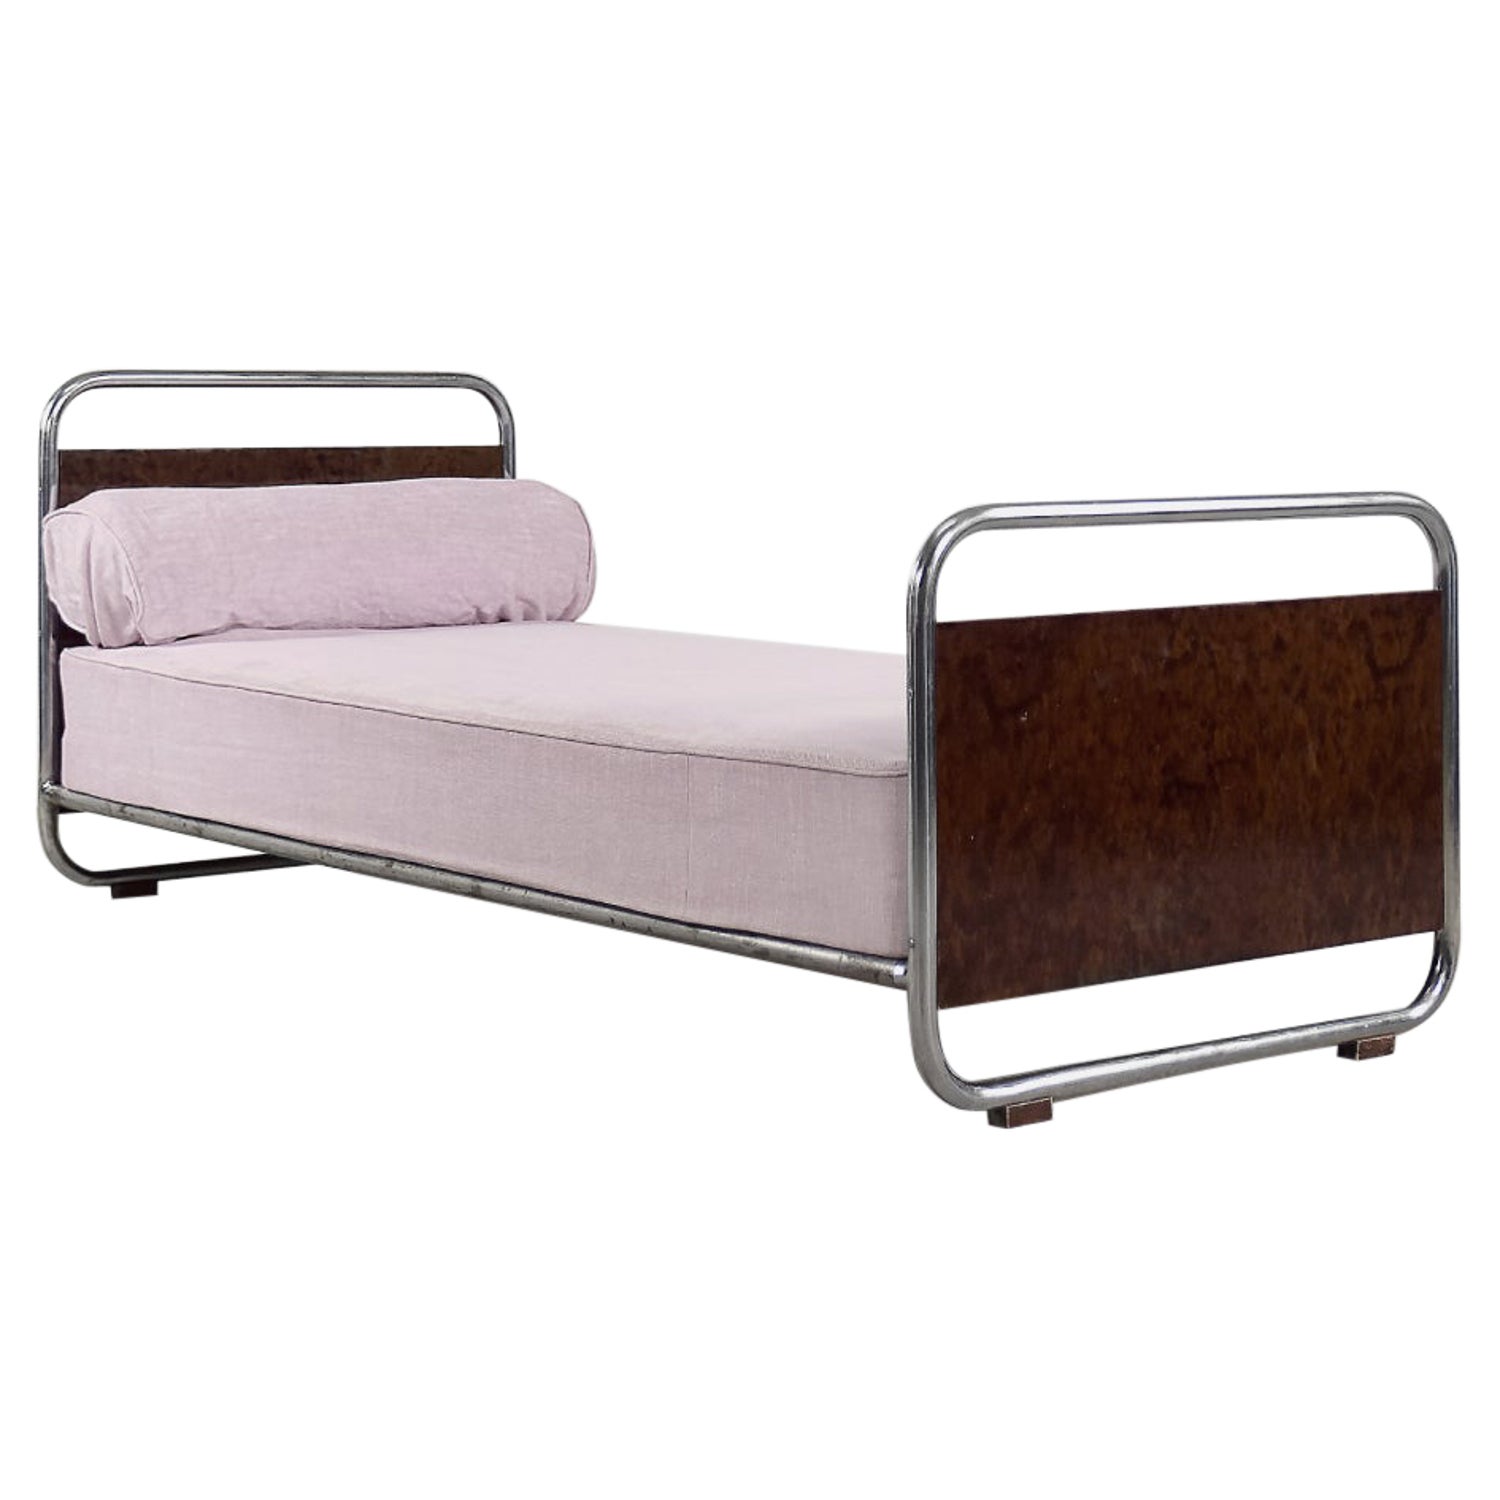 Bauhaus Beds and Bed Frames - 8 For Sale at 1stDibs | bauhaus bedroom